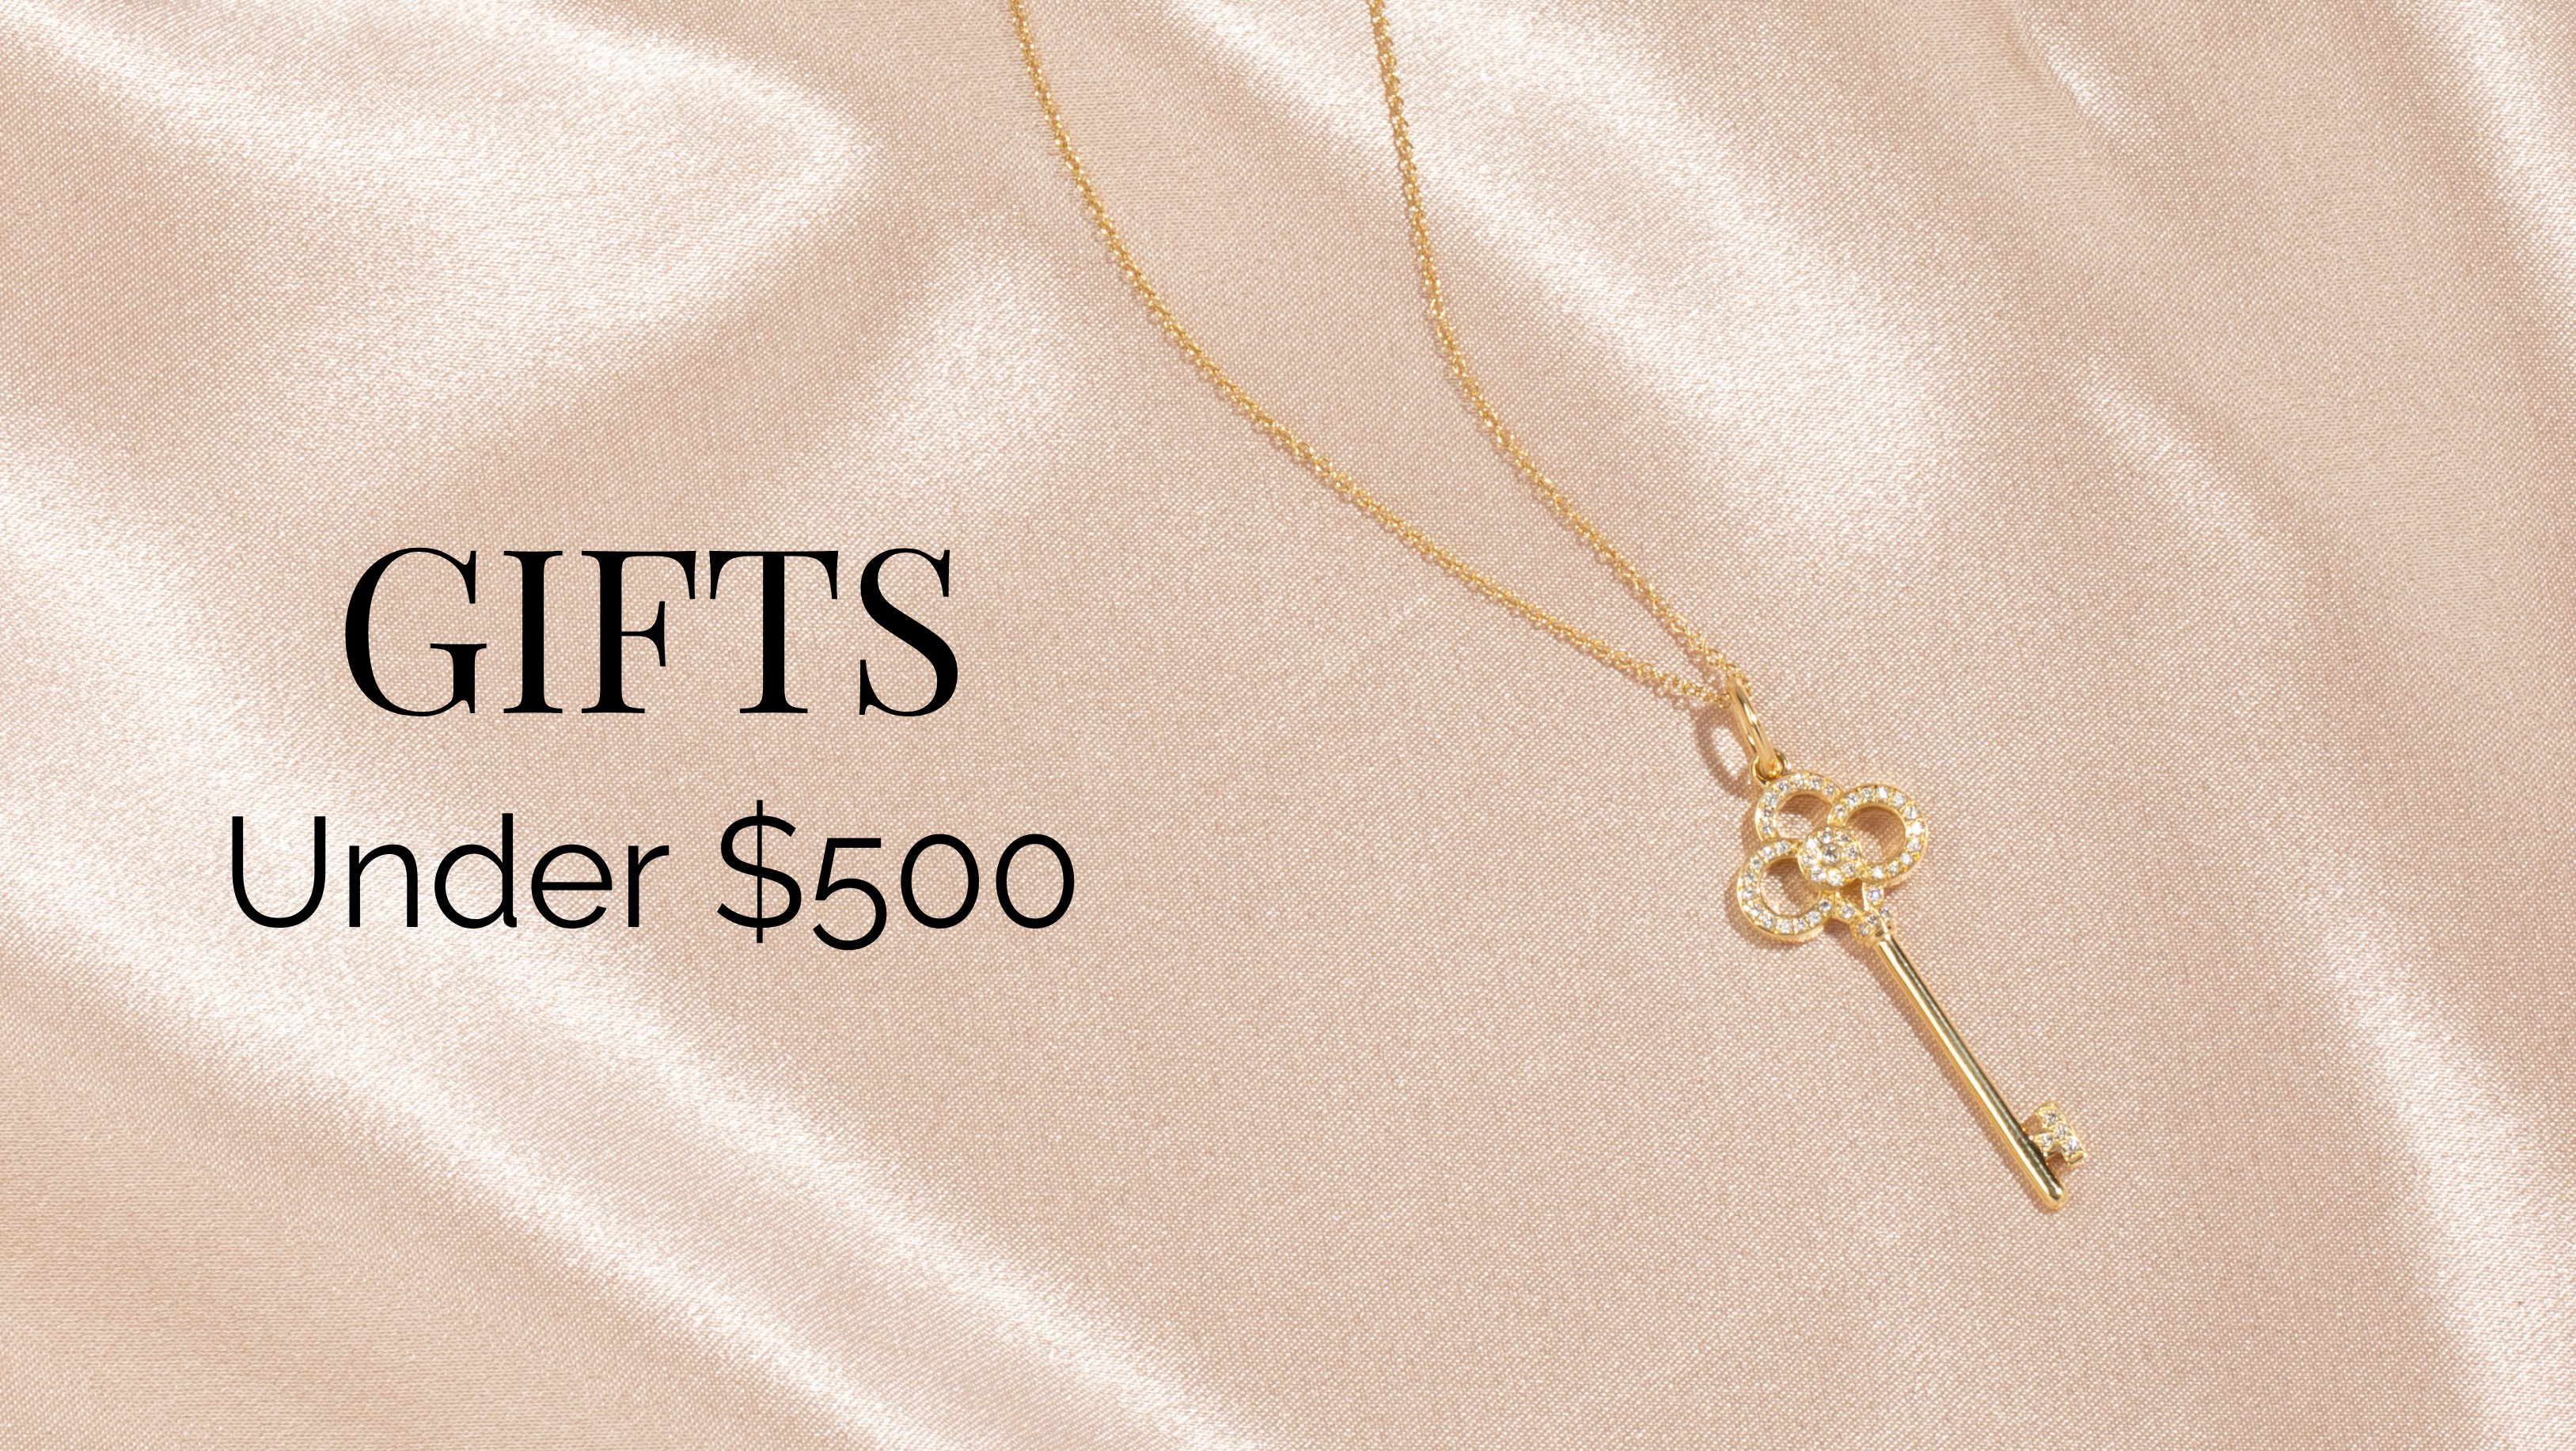 Louis Vuitton (LV CIRCLE LEATHER BRACELET) $275 - Jewelry